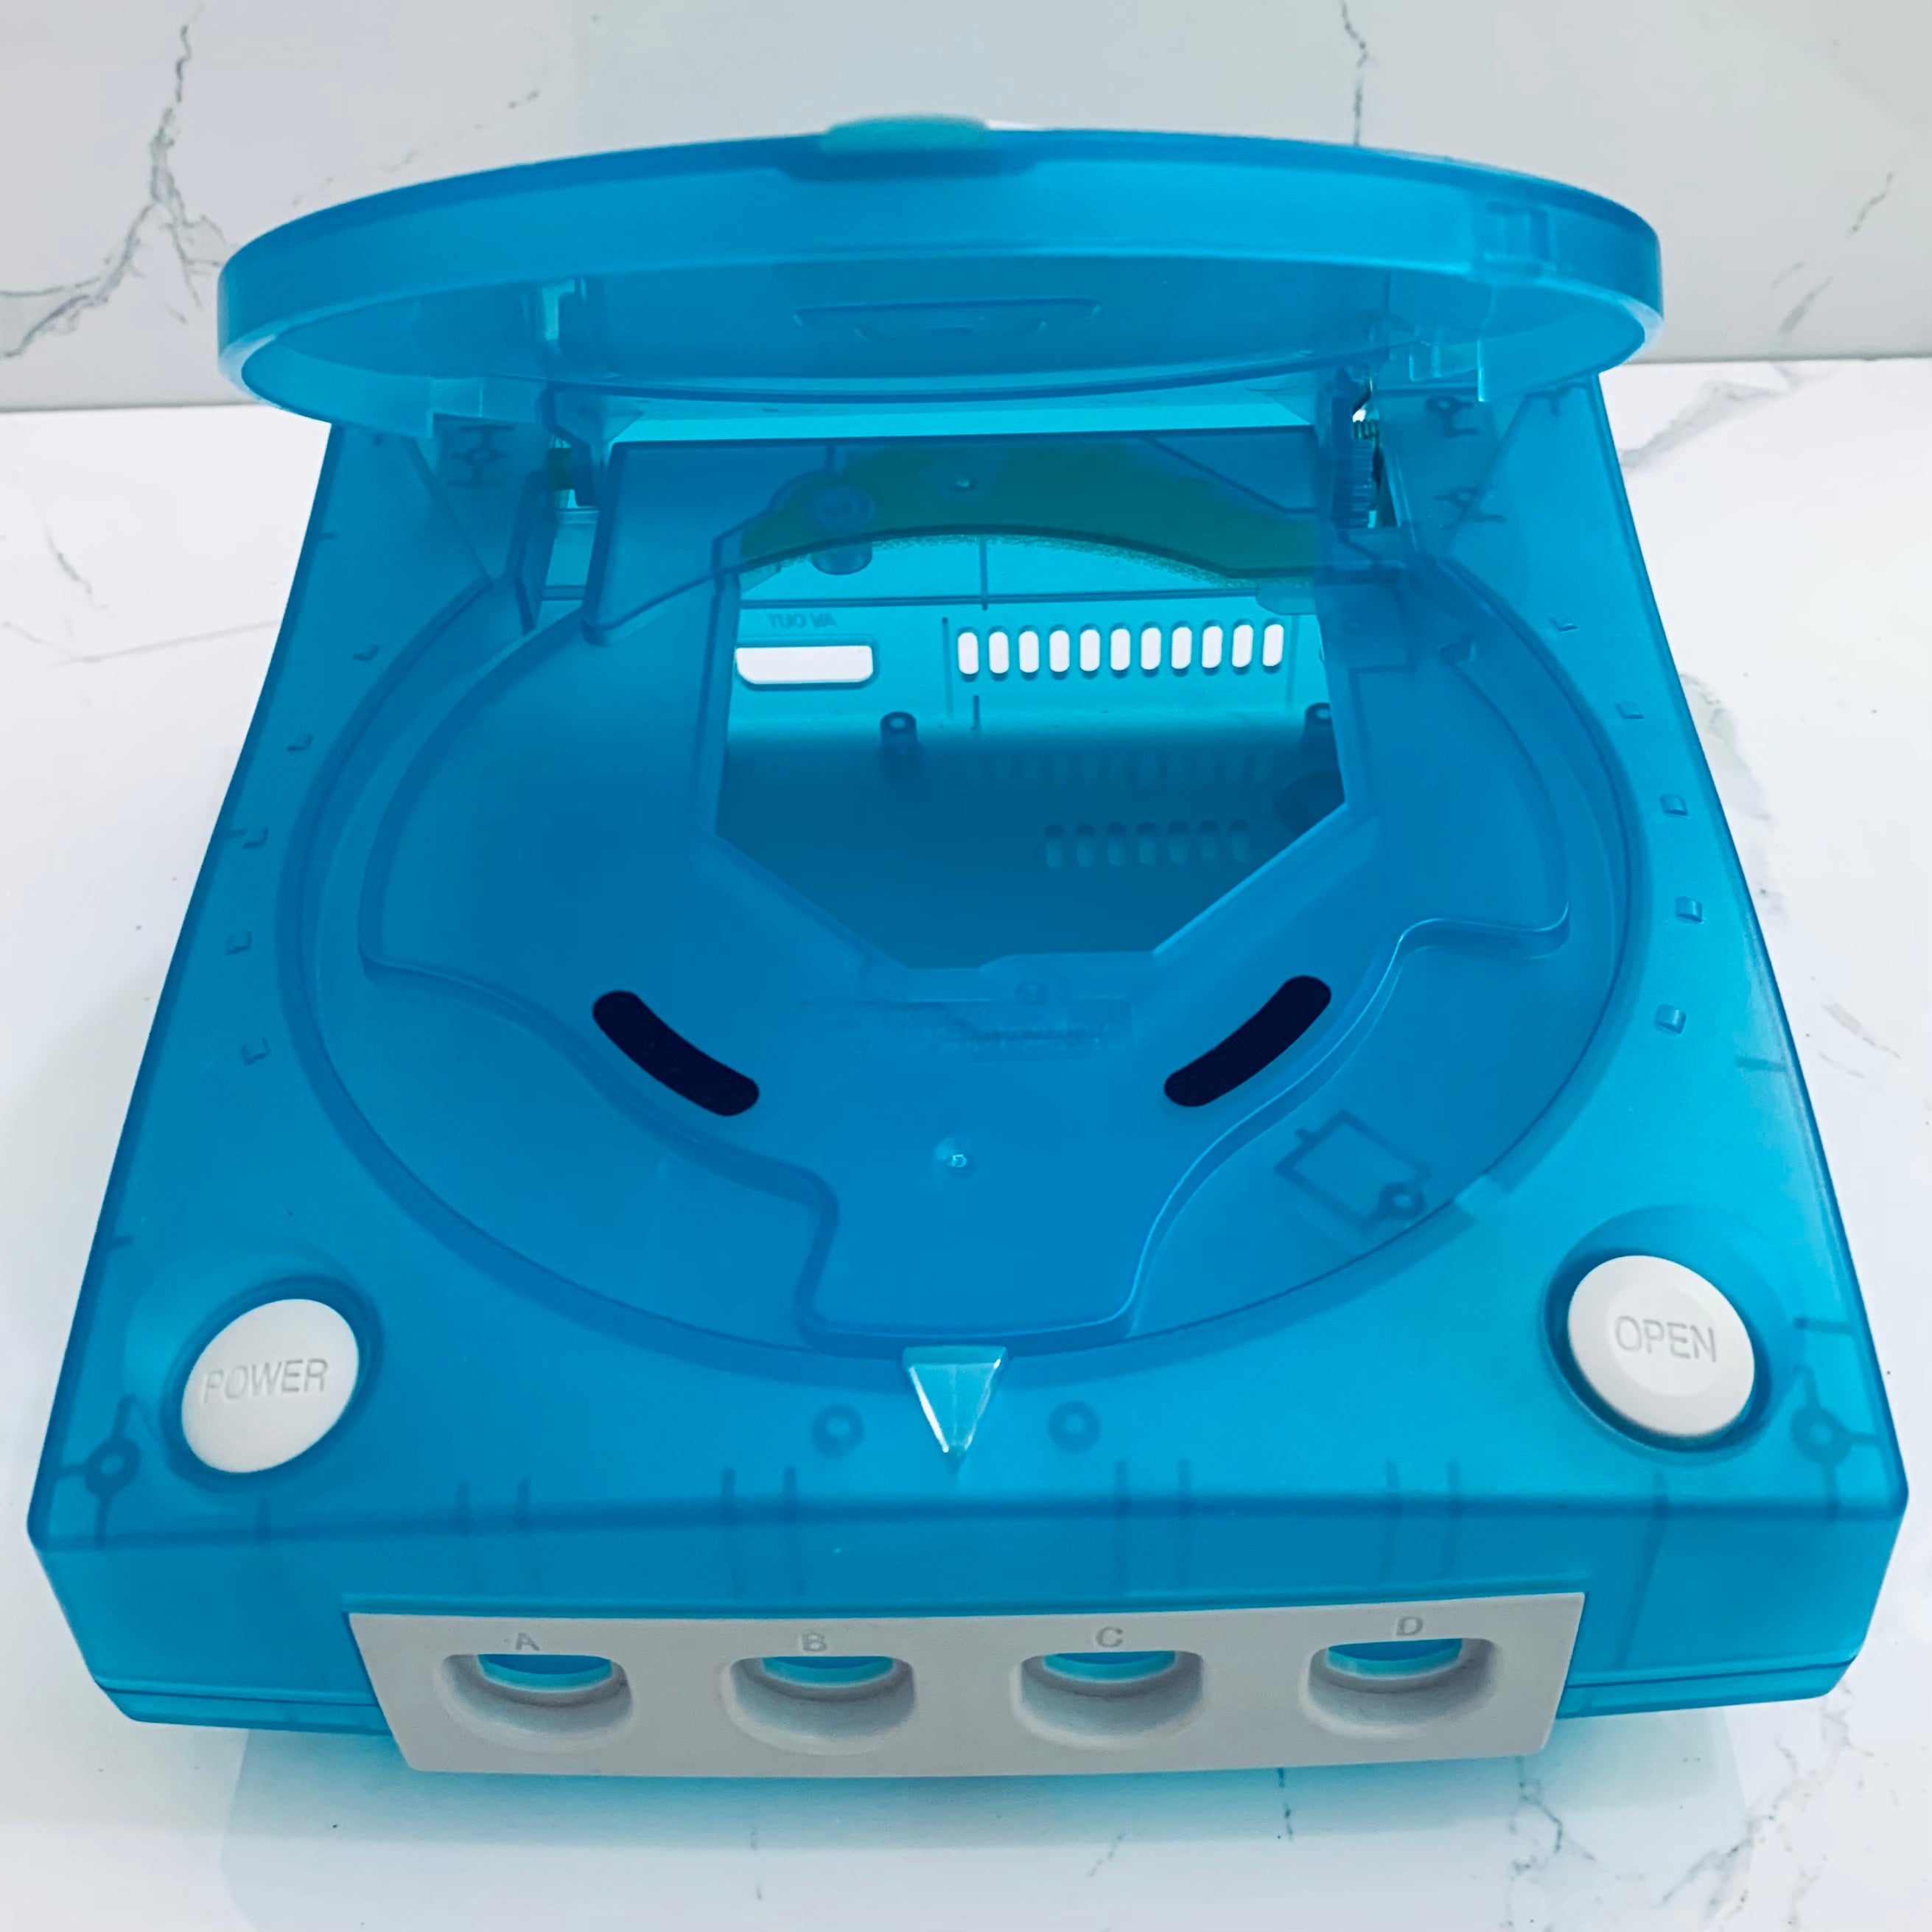 Sega Dreamcast - Translucent Case / Shell - Brand New (Blue